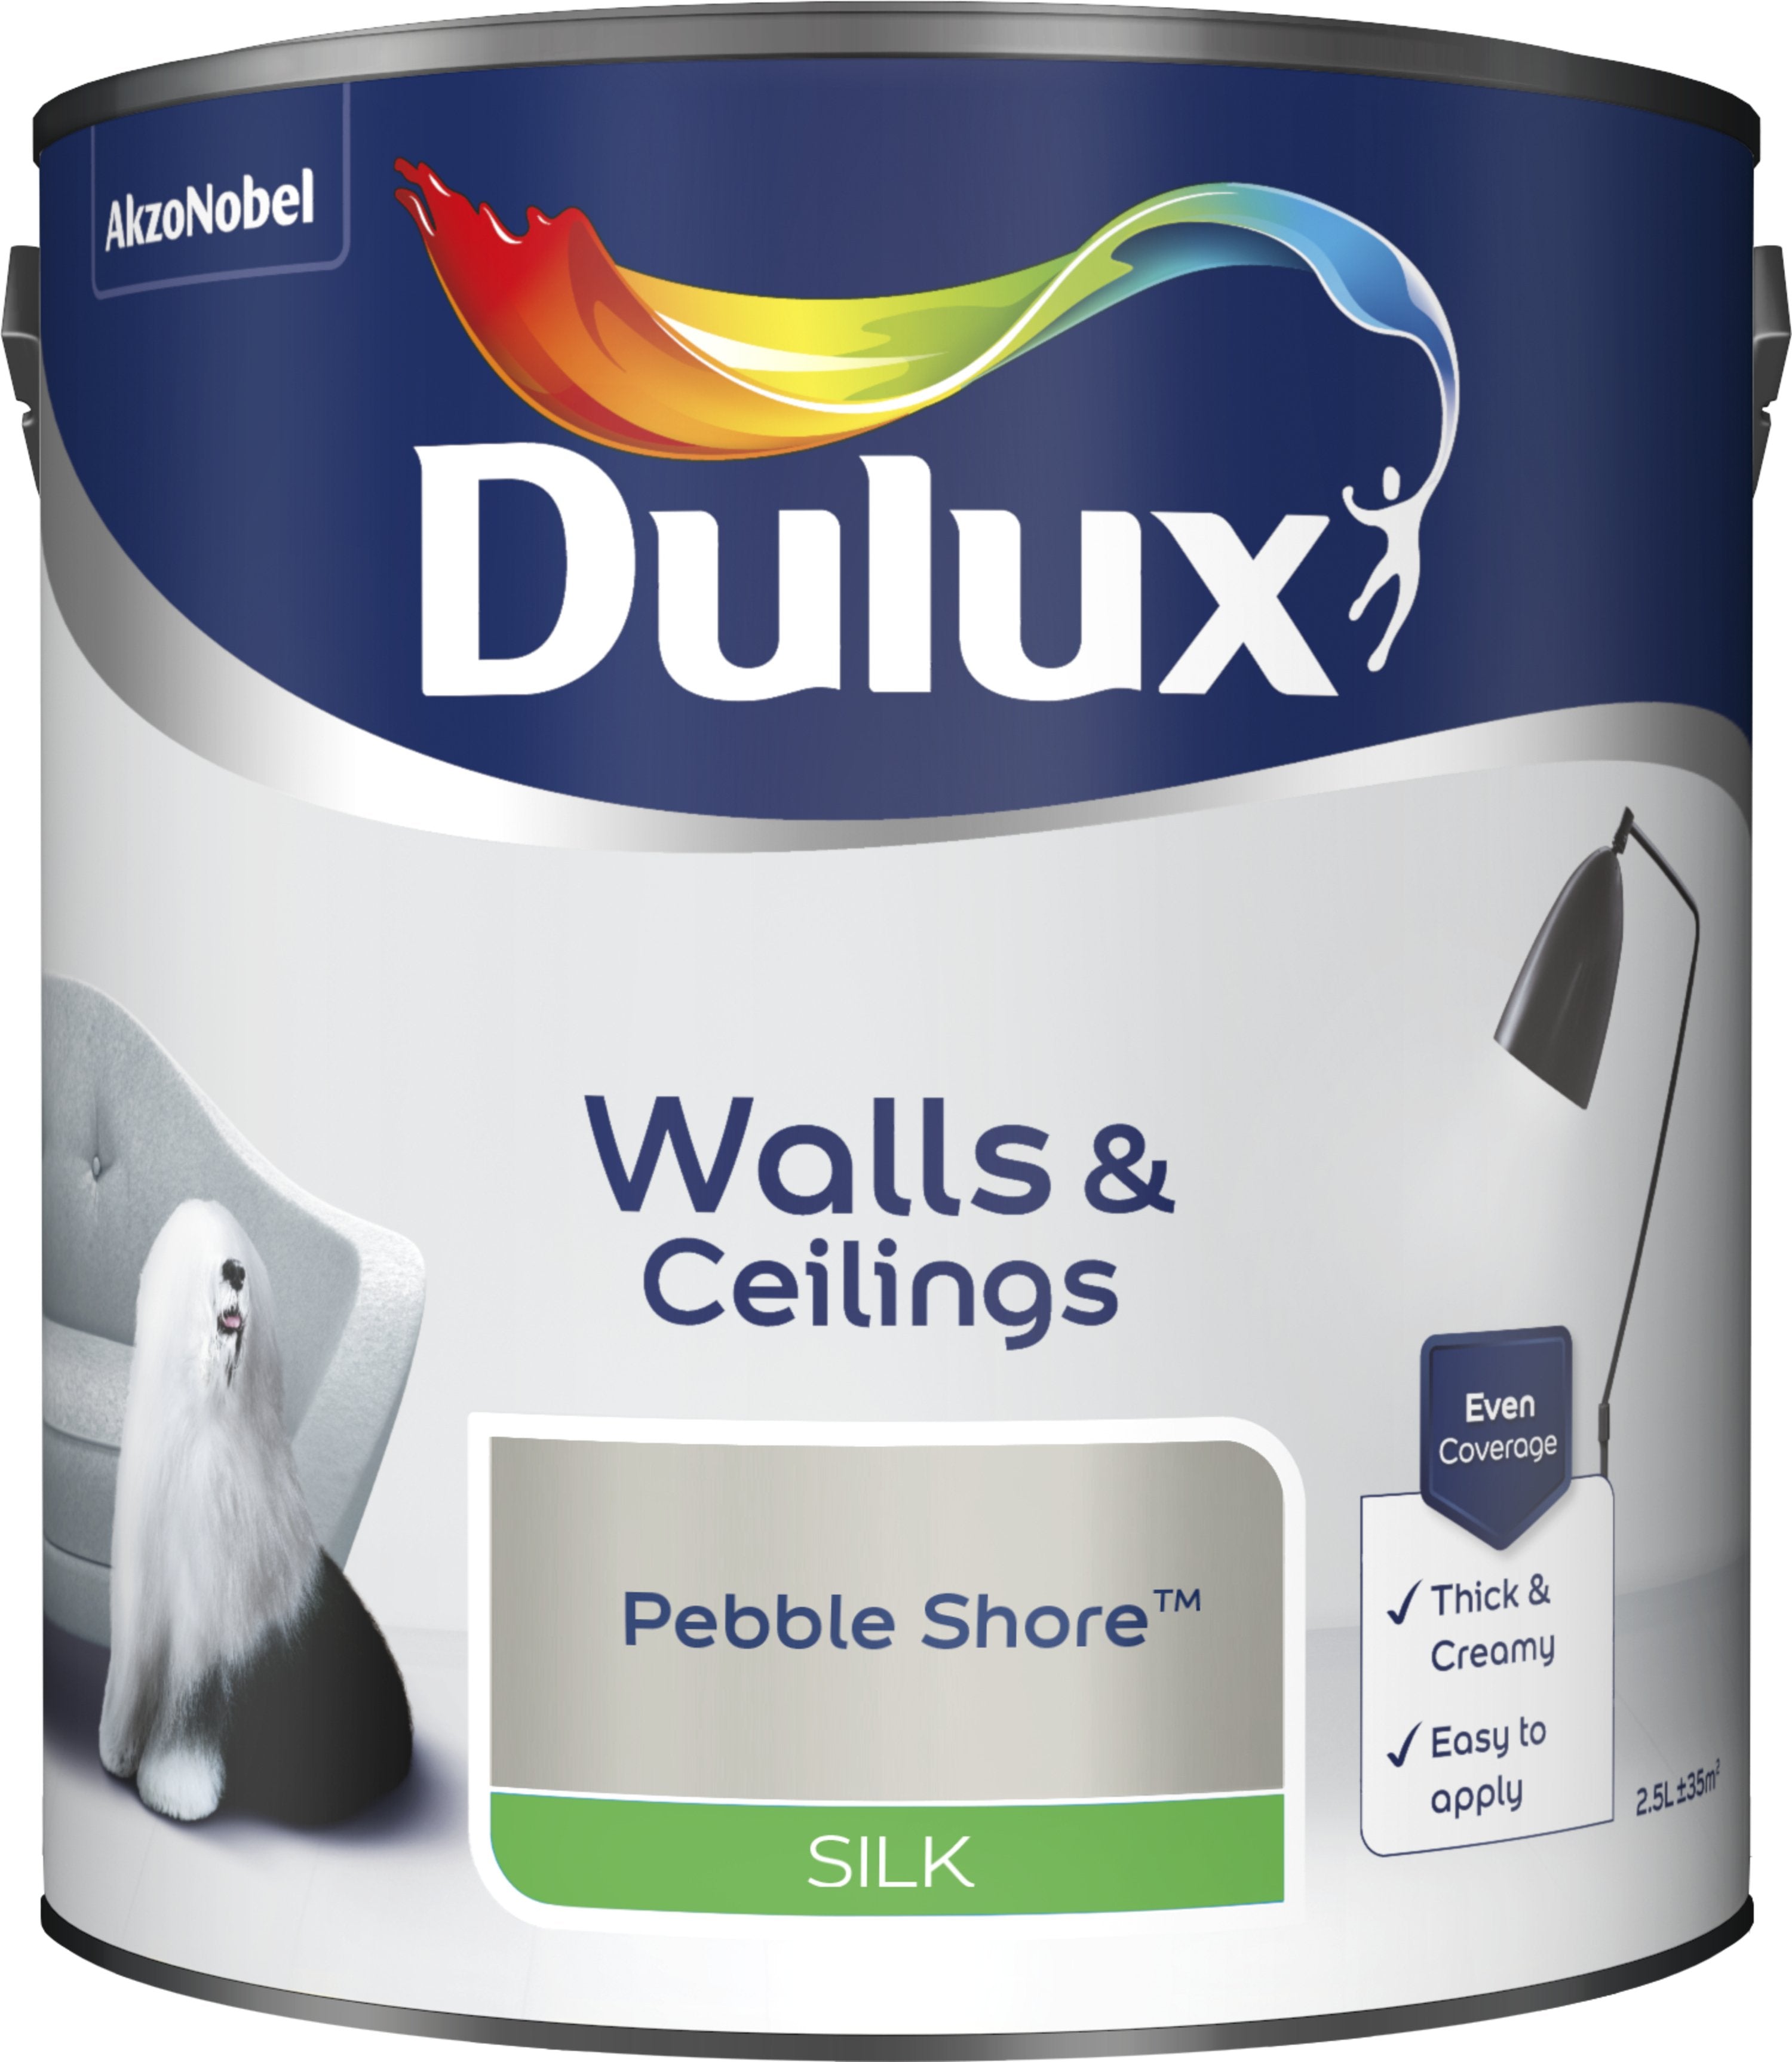 Dulux Silk Emulsion Paint For Walls And Ceilings - Pebble Shore 2.5L Garden & Diy  Home Improvements